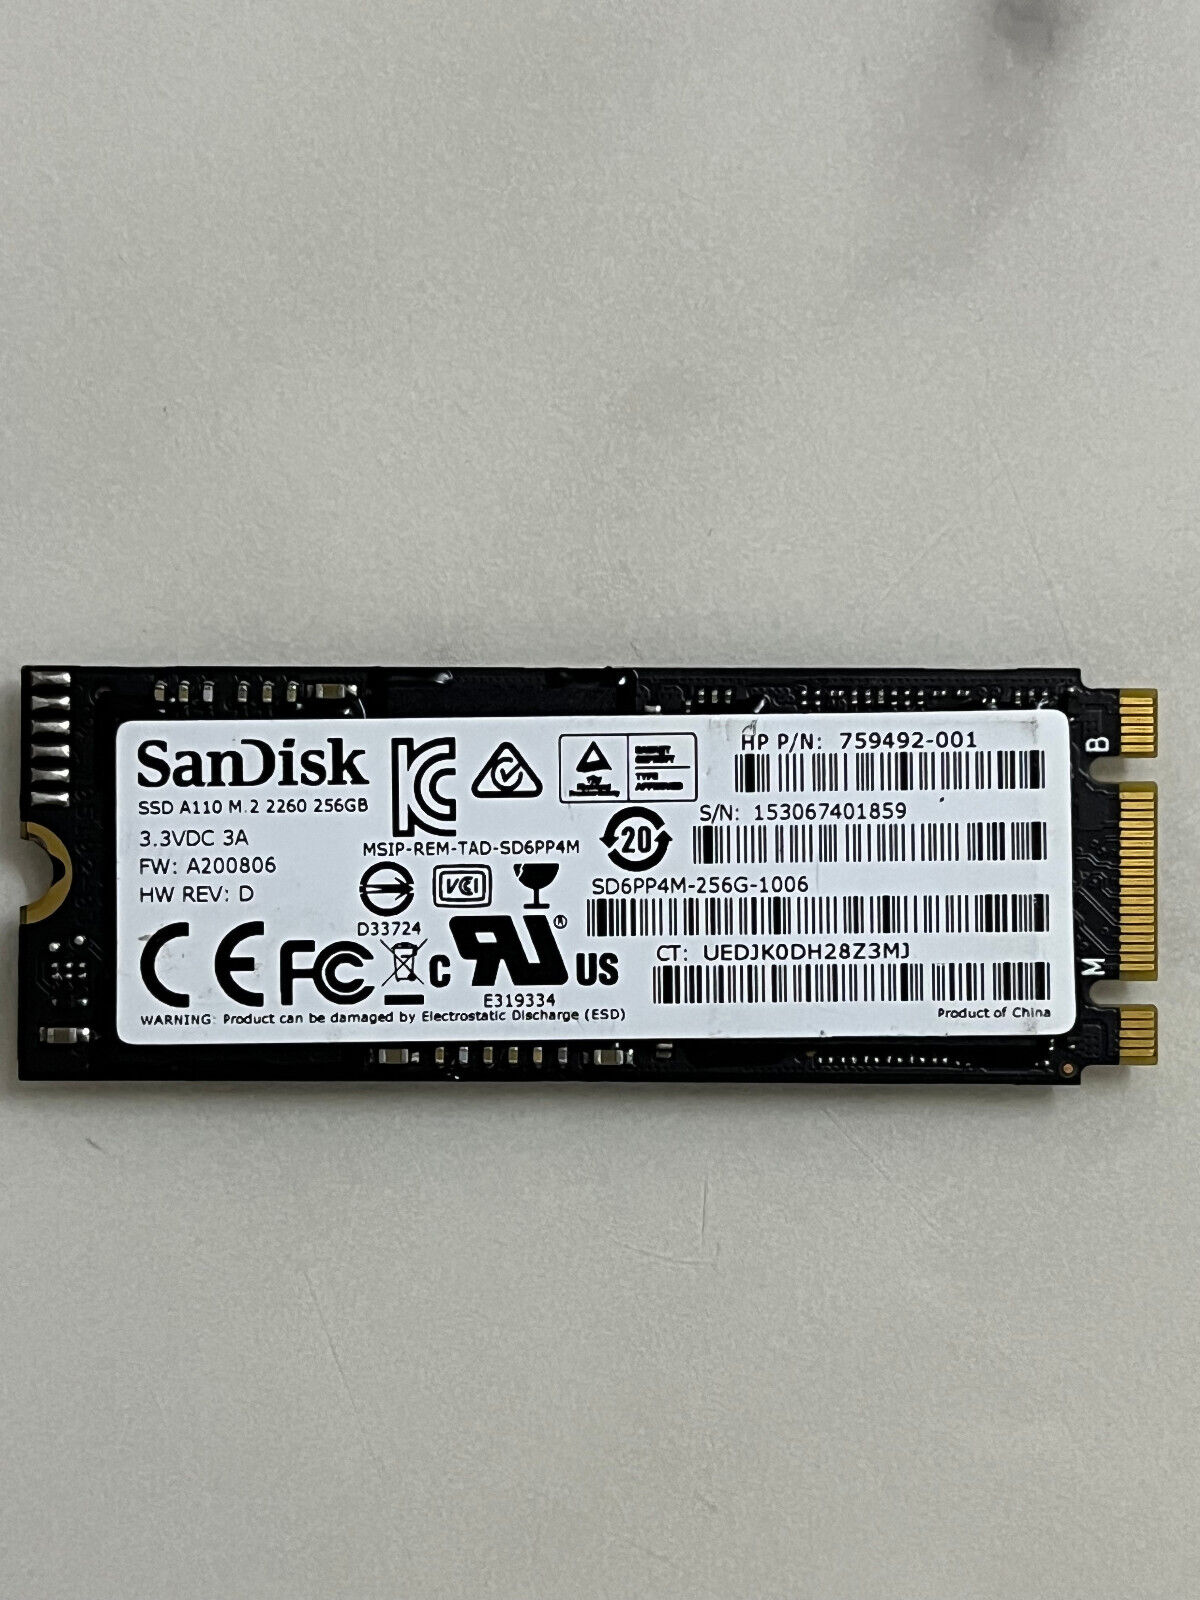 Sandisk A110 SSD SD6PP4M-256G-1006 M.2 2260 256GB PCIe NVMe for HP Zbook Laptop